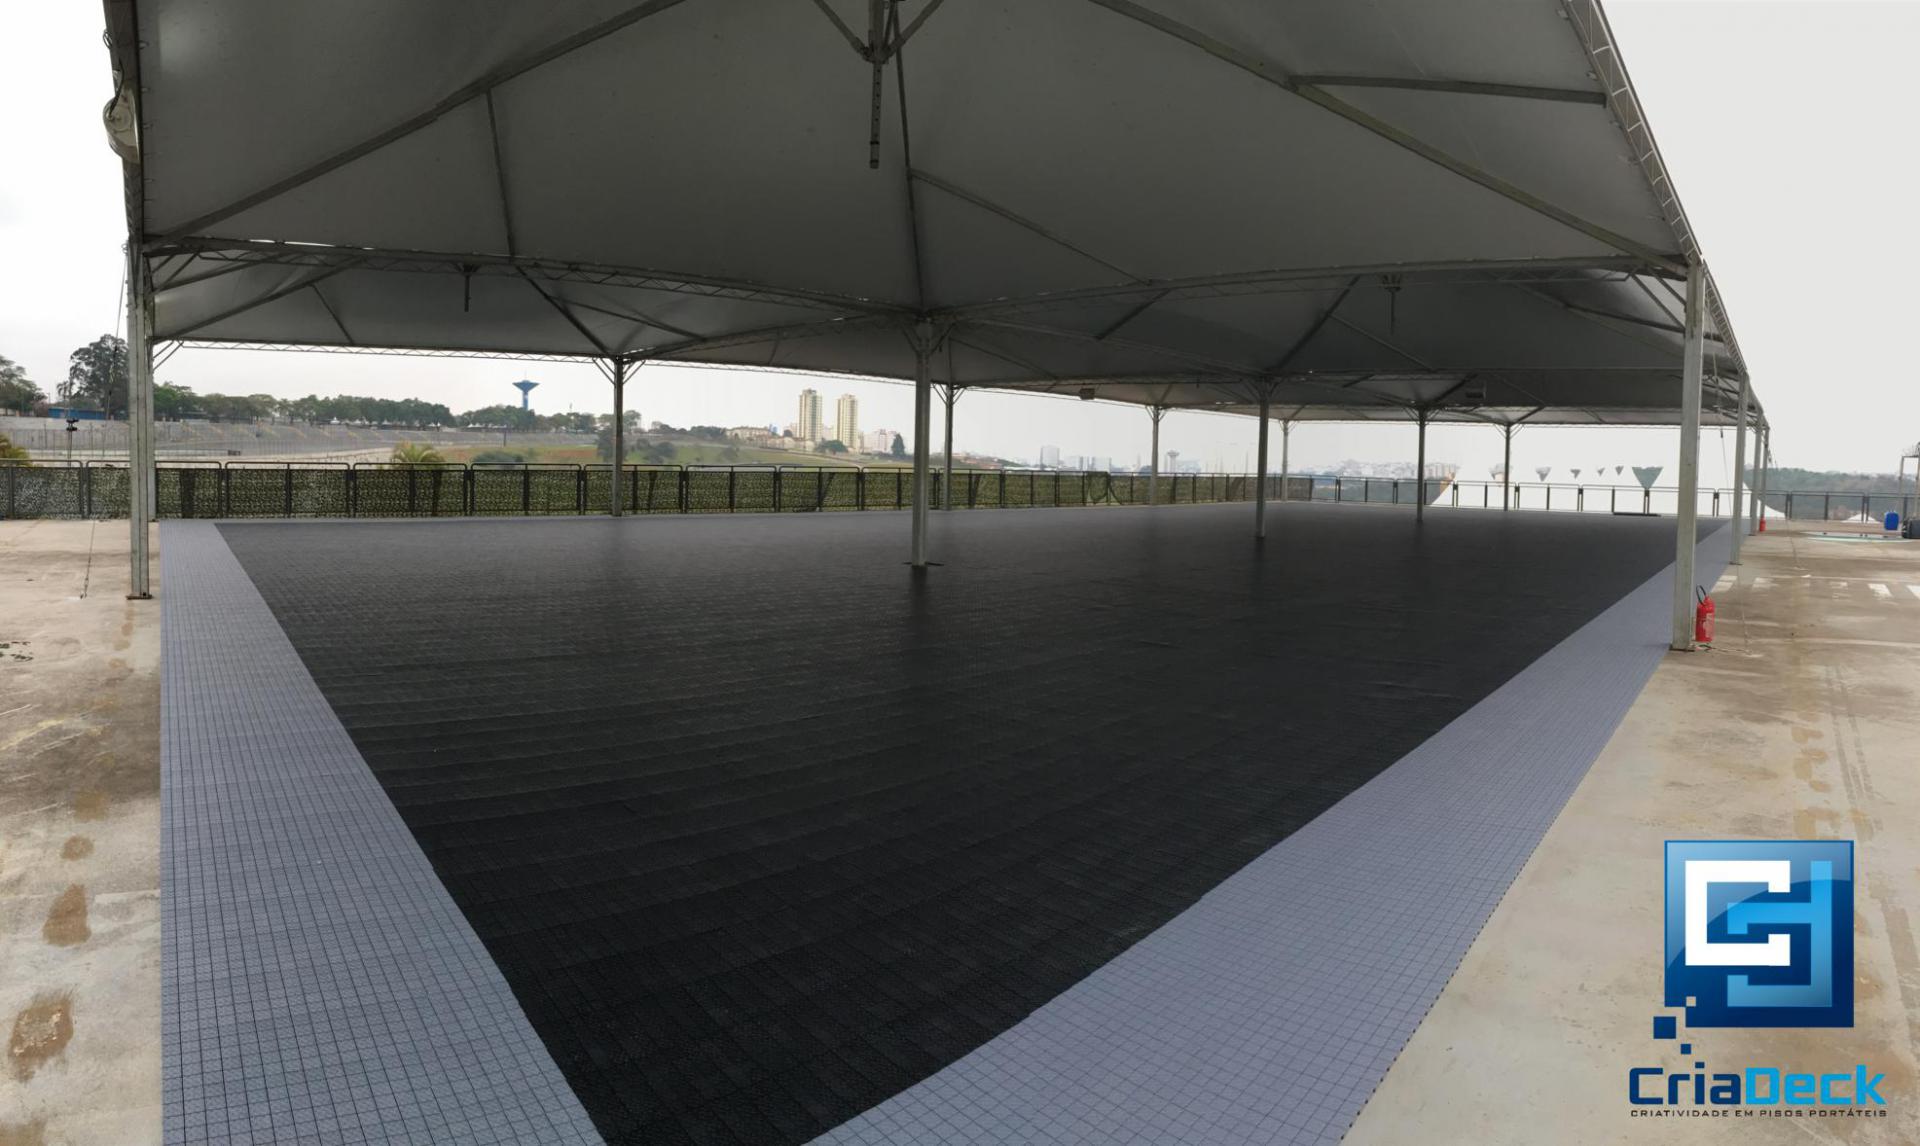 piso plastico corrida do milhao 2016 interlagos